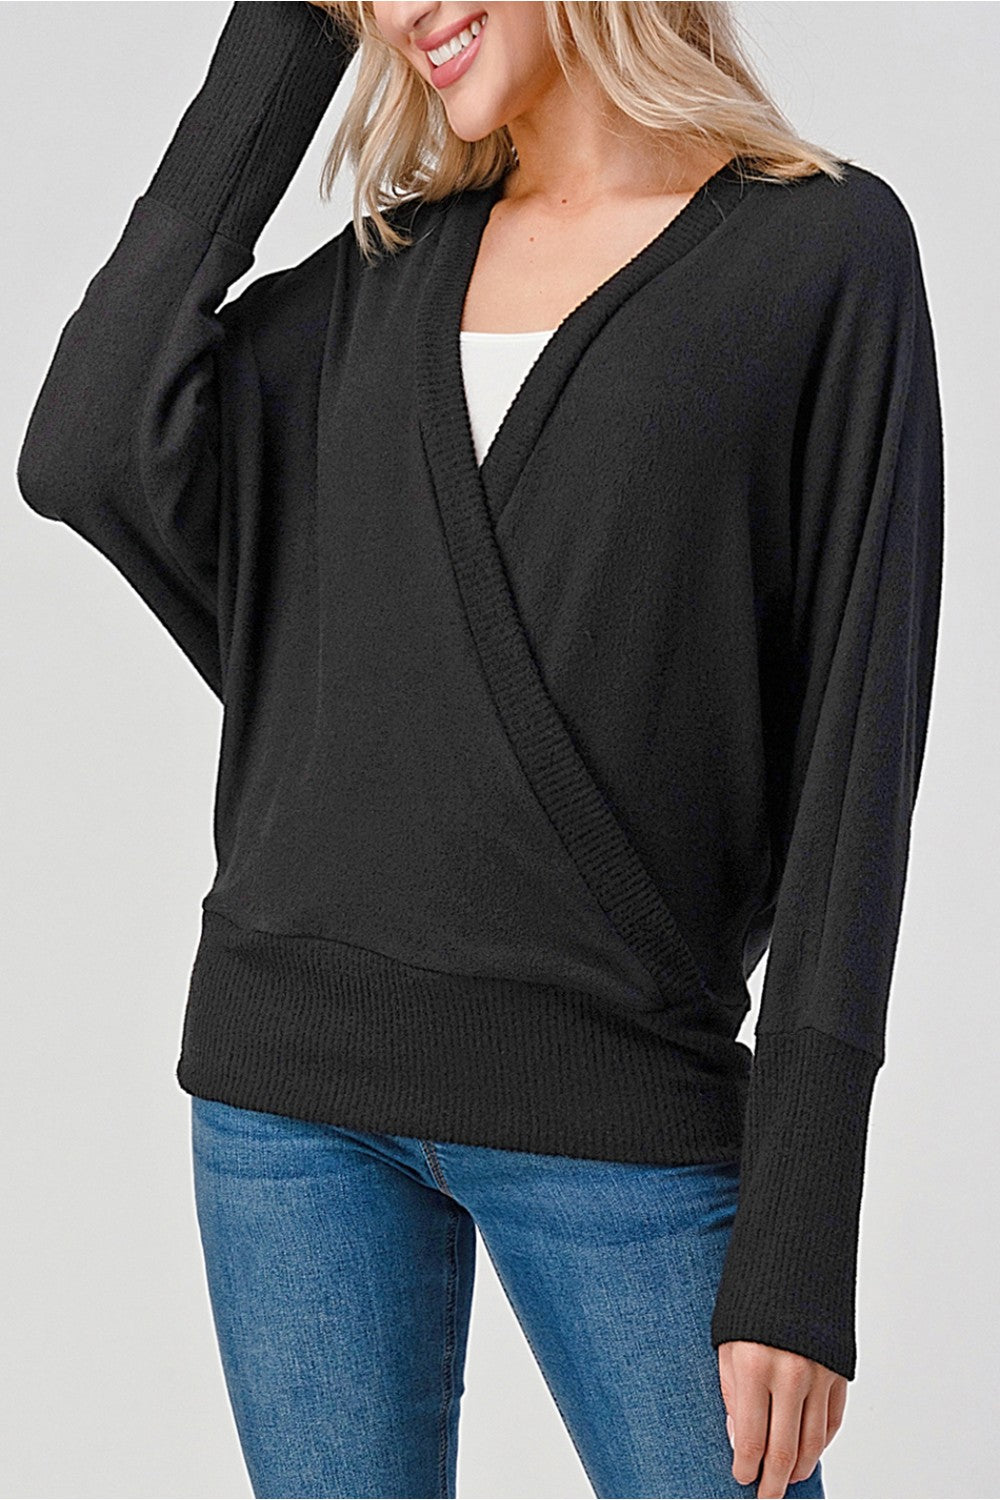 Natural Vibe Wrap Sweater (Black)